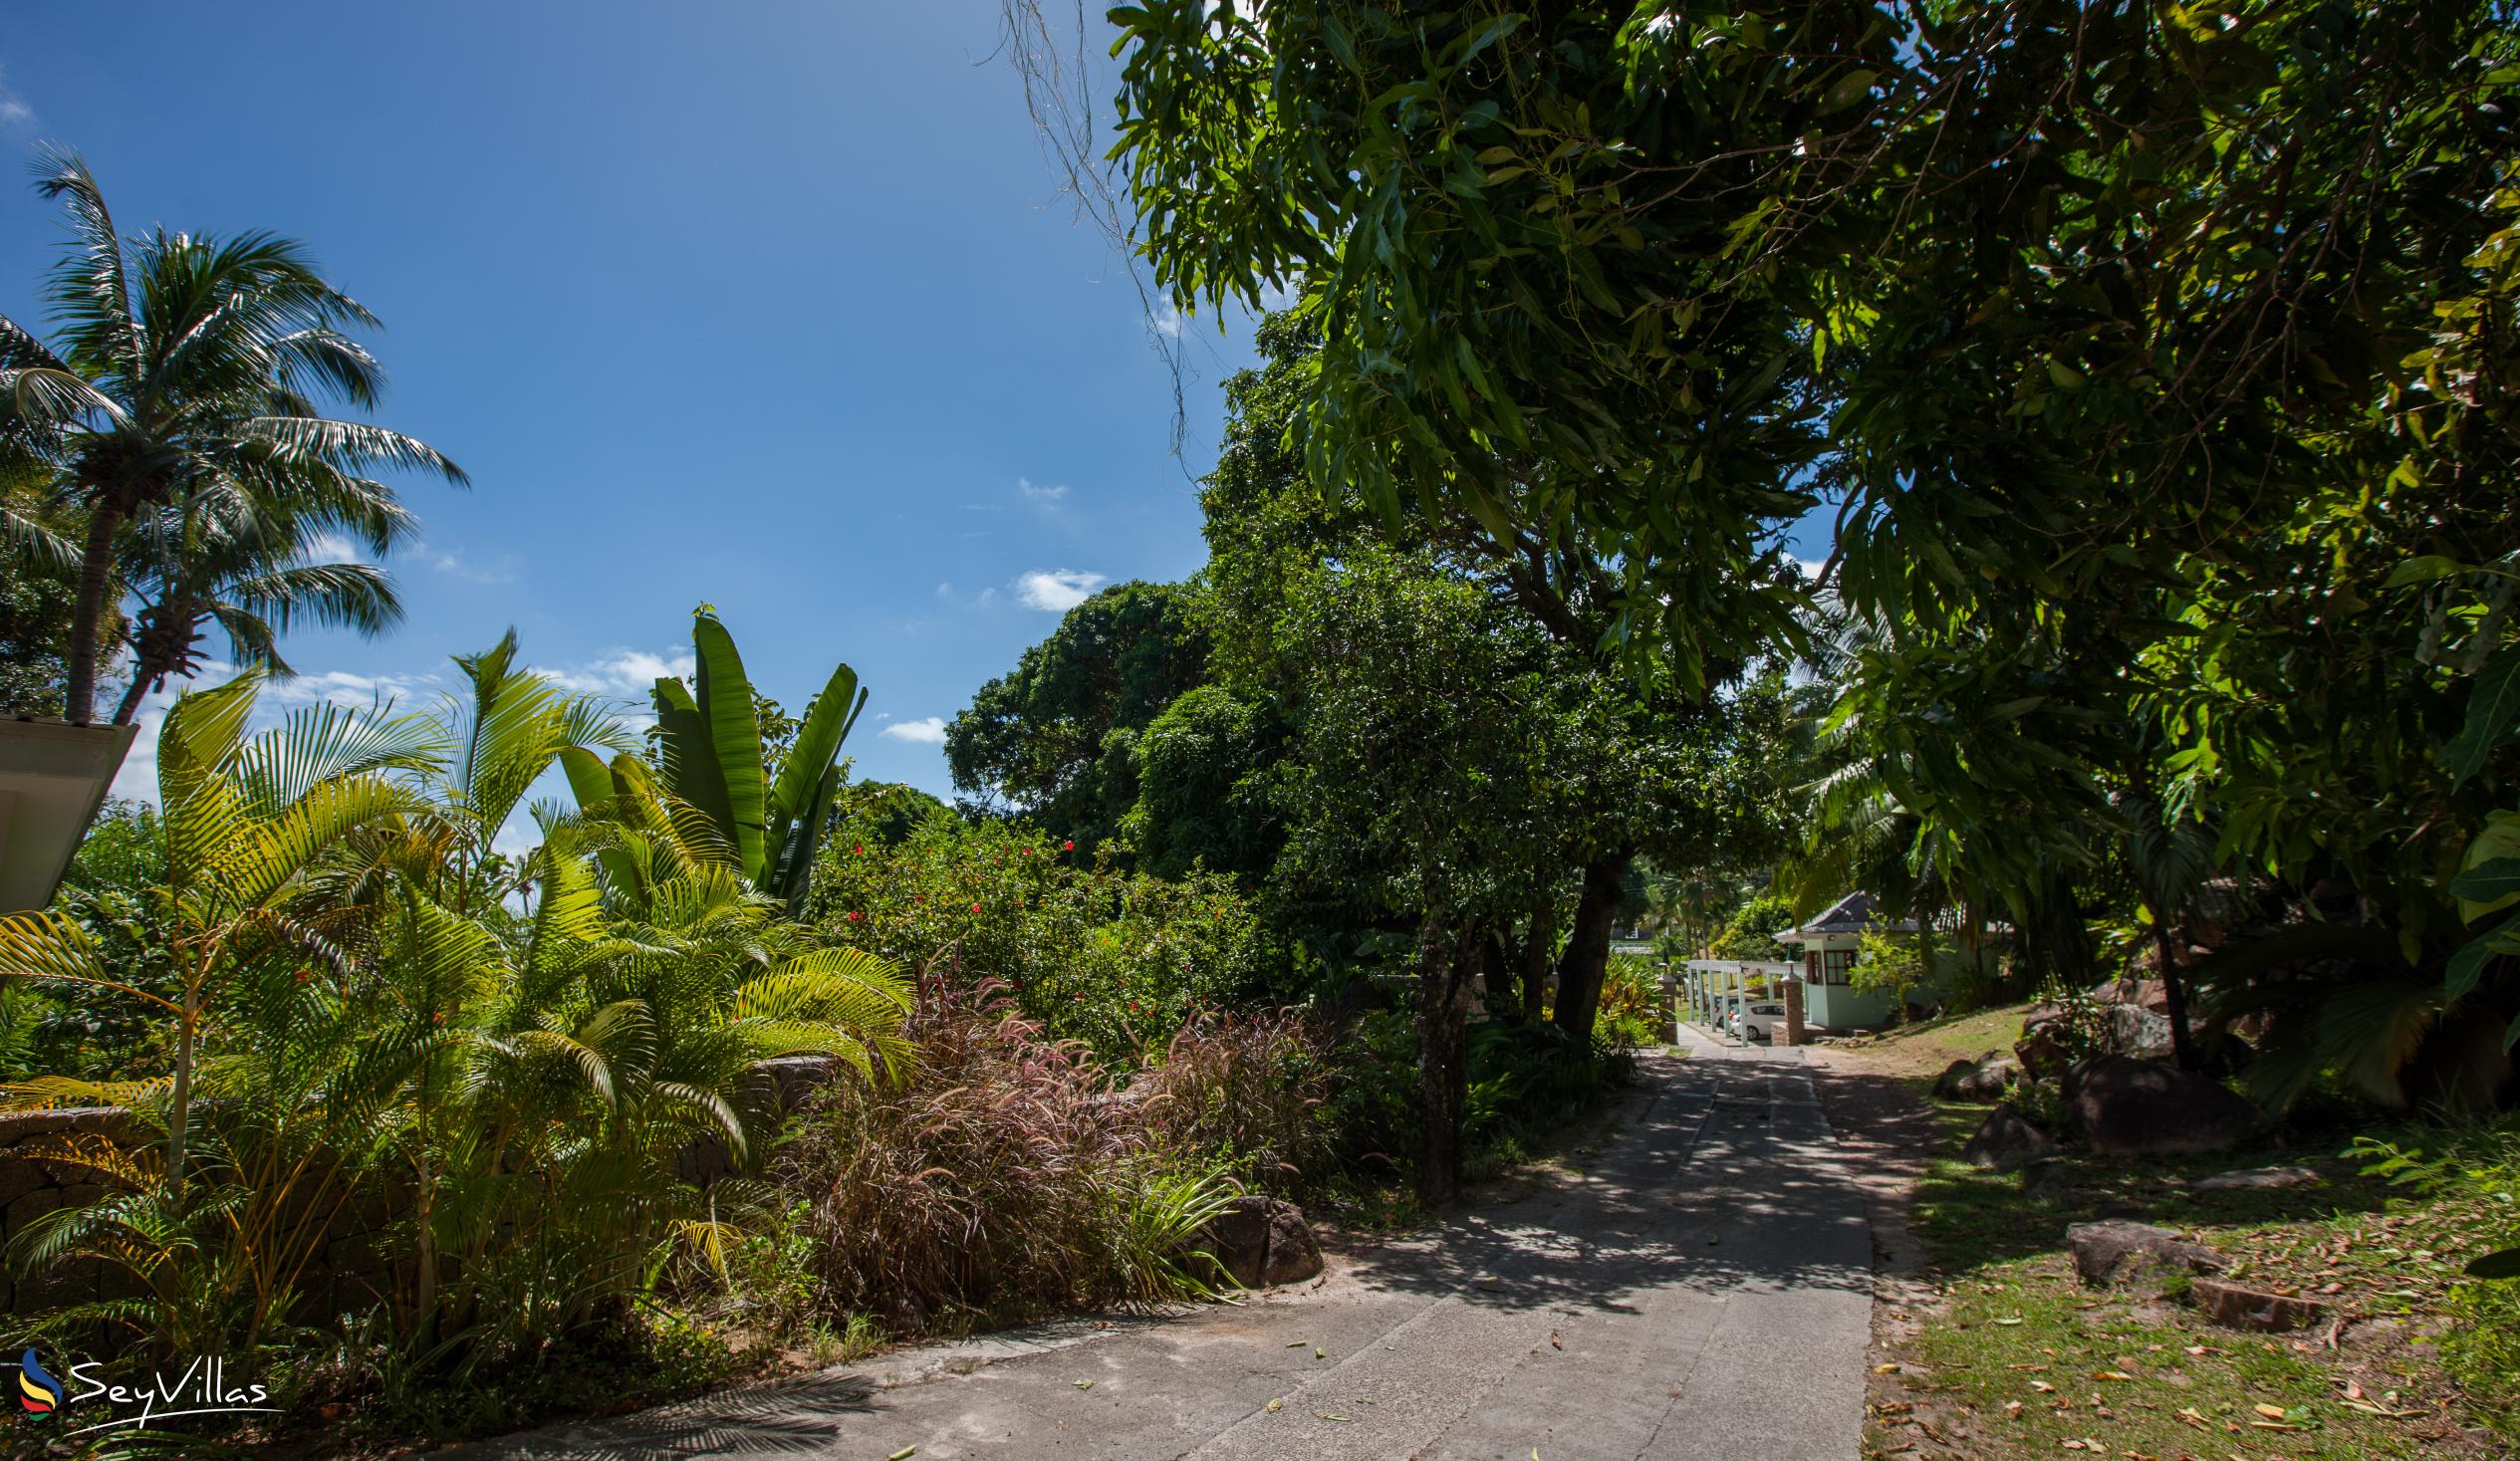 Foto 56: Villa Deckenia - Posizione - Praslin (Seychelles)